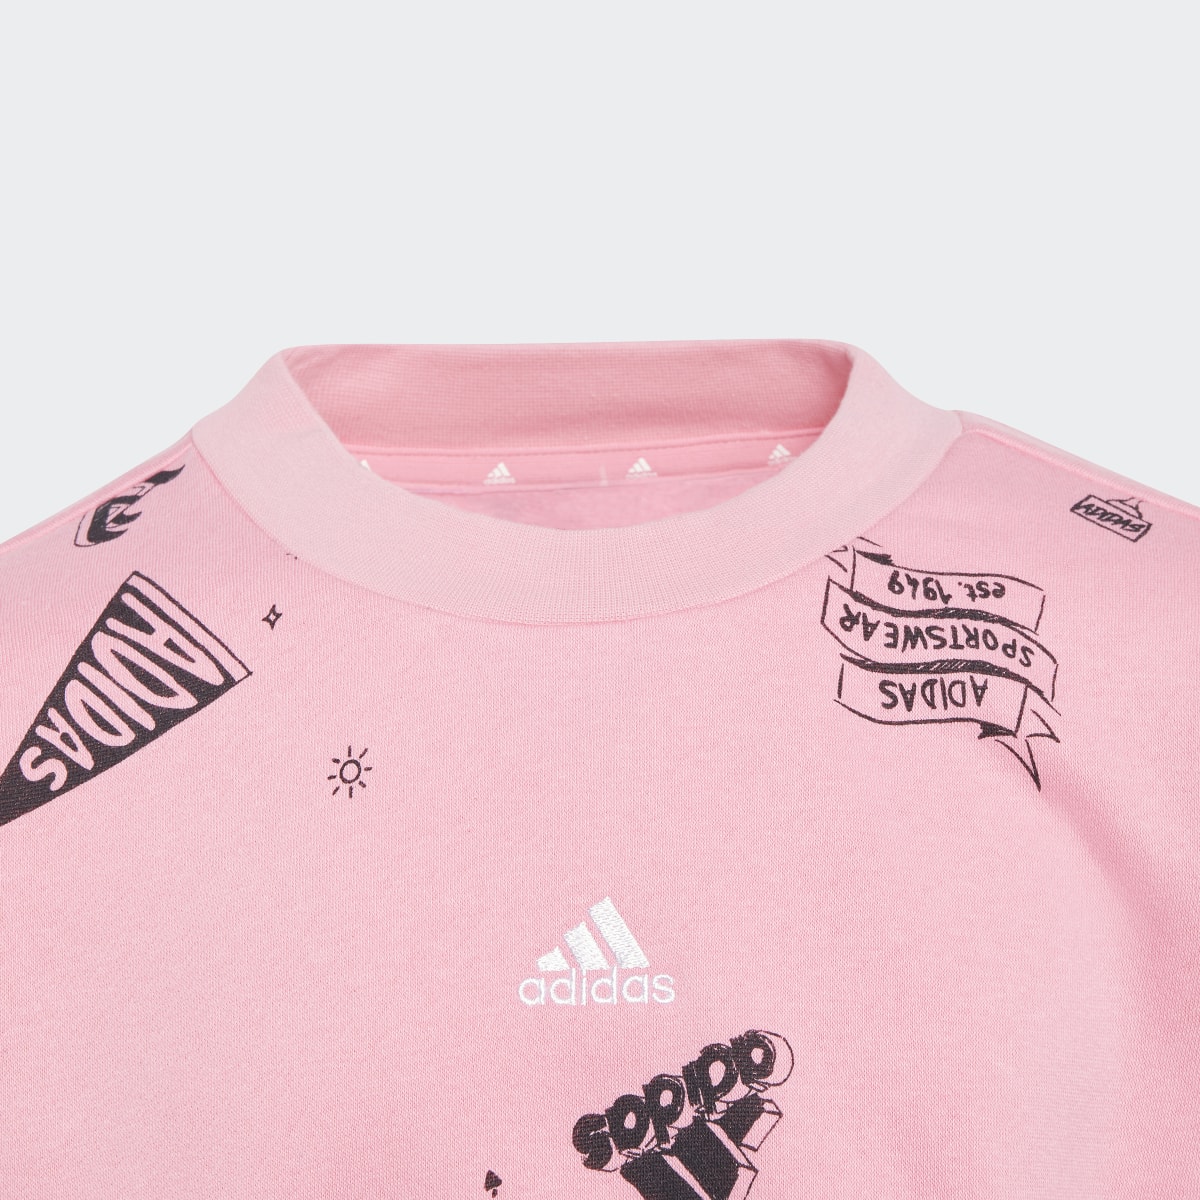 Adidas Sweatshirt Brand Love – Criança. 4